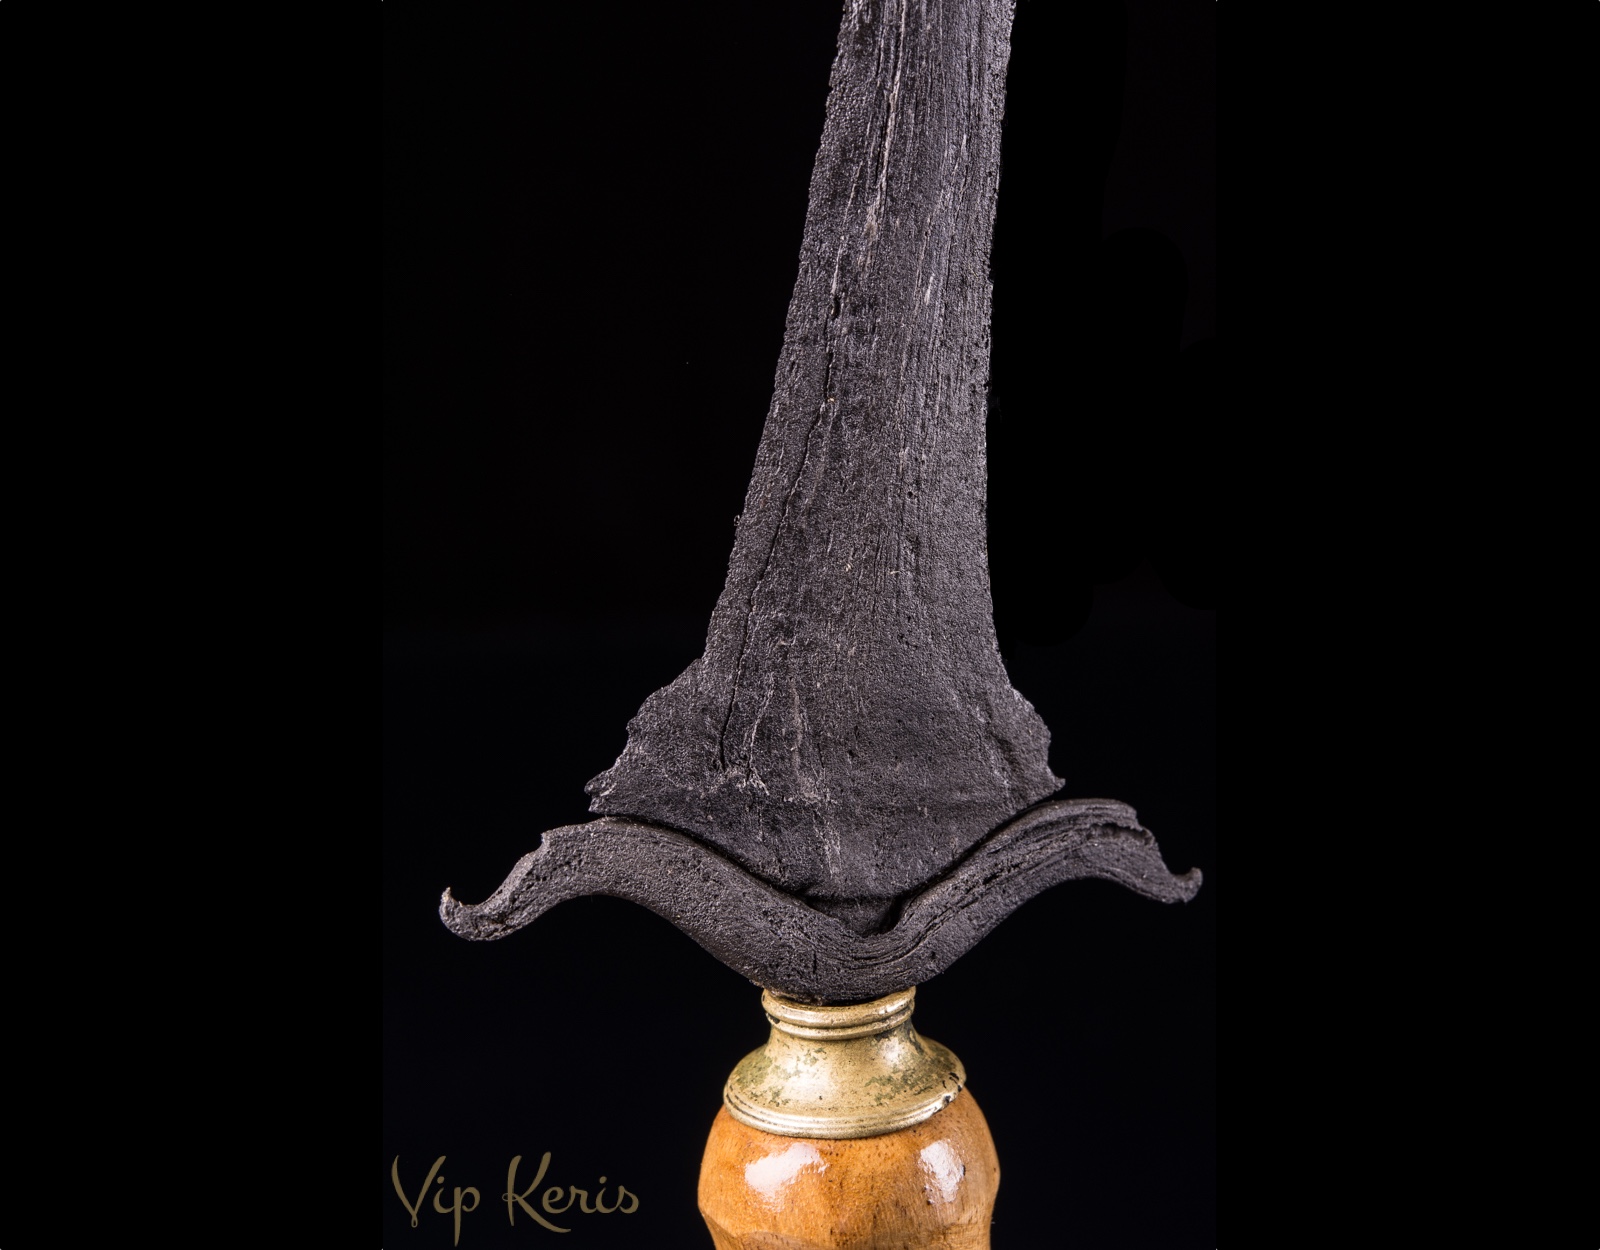 Нож Крис Sepang Yuyu Rumpung, магия рода. фото VipKeris